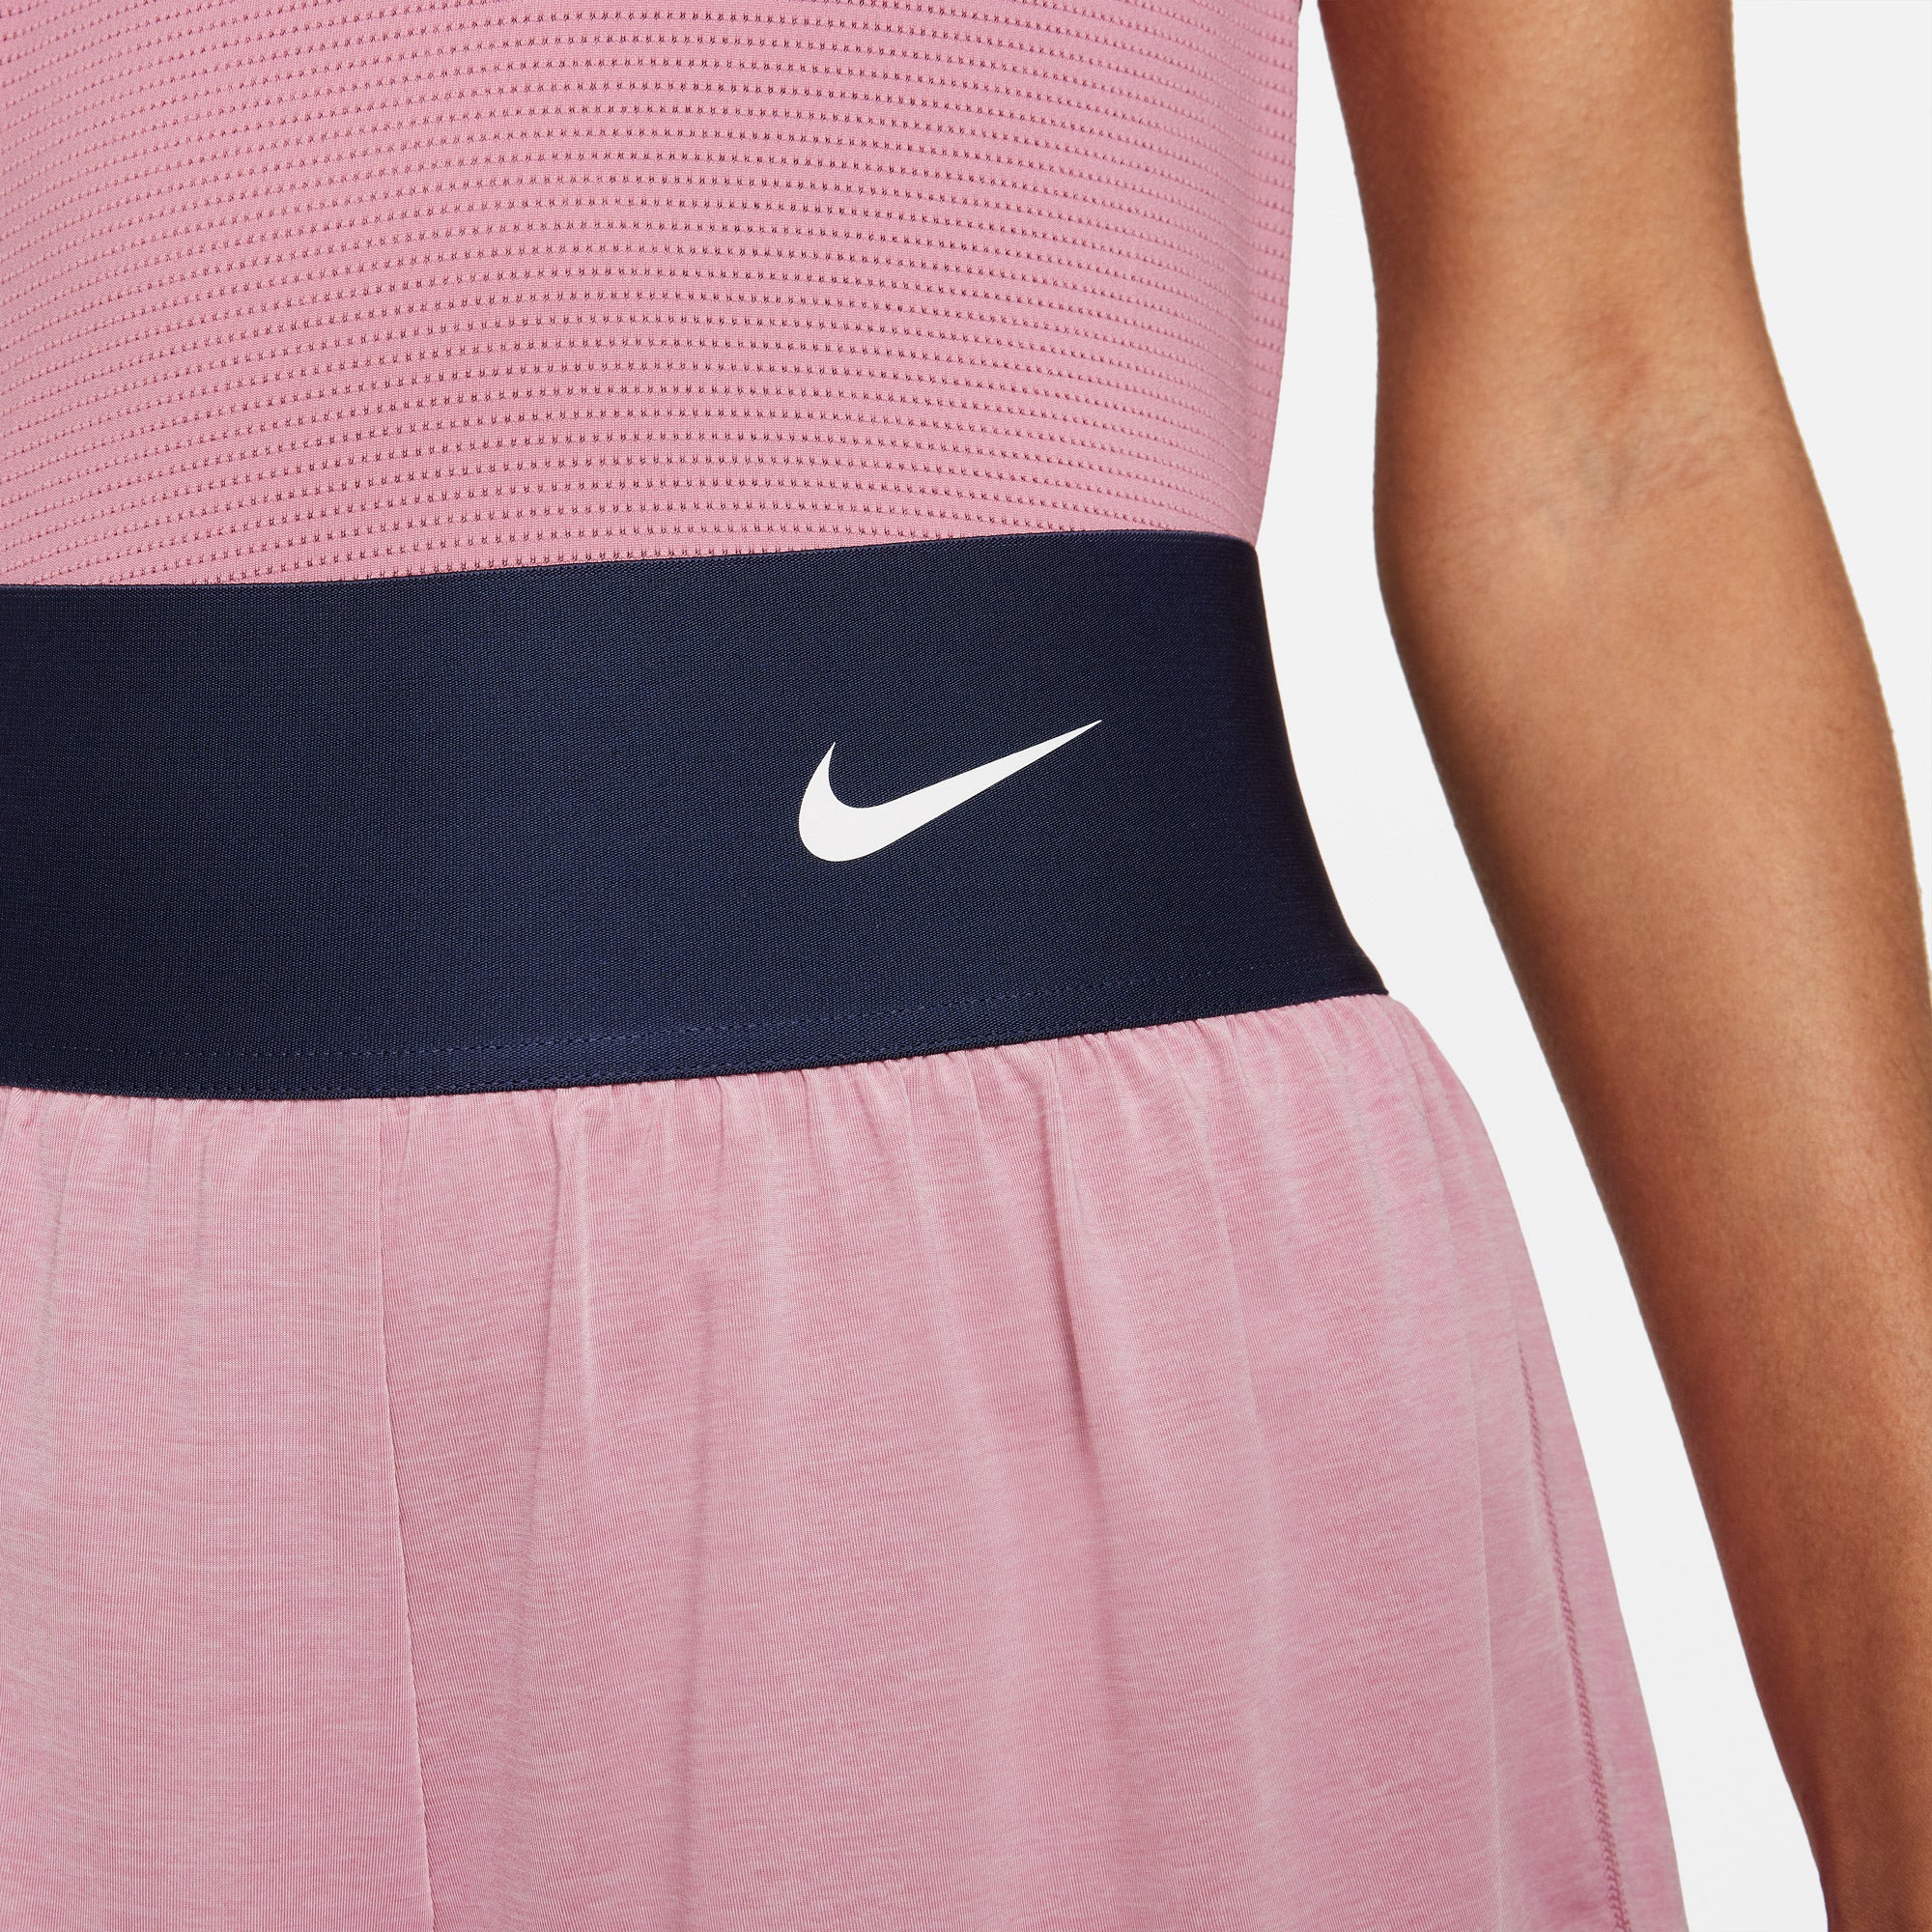 Nike Dri-FIT Advantage Women's Tennis Shorts Pink (4)